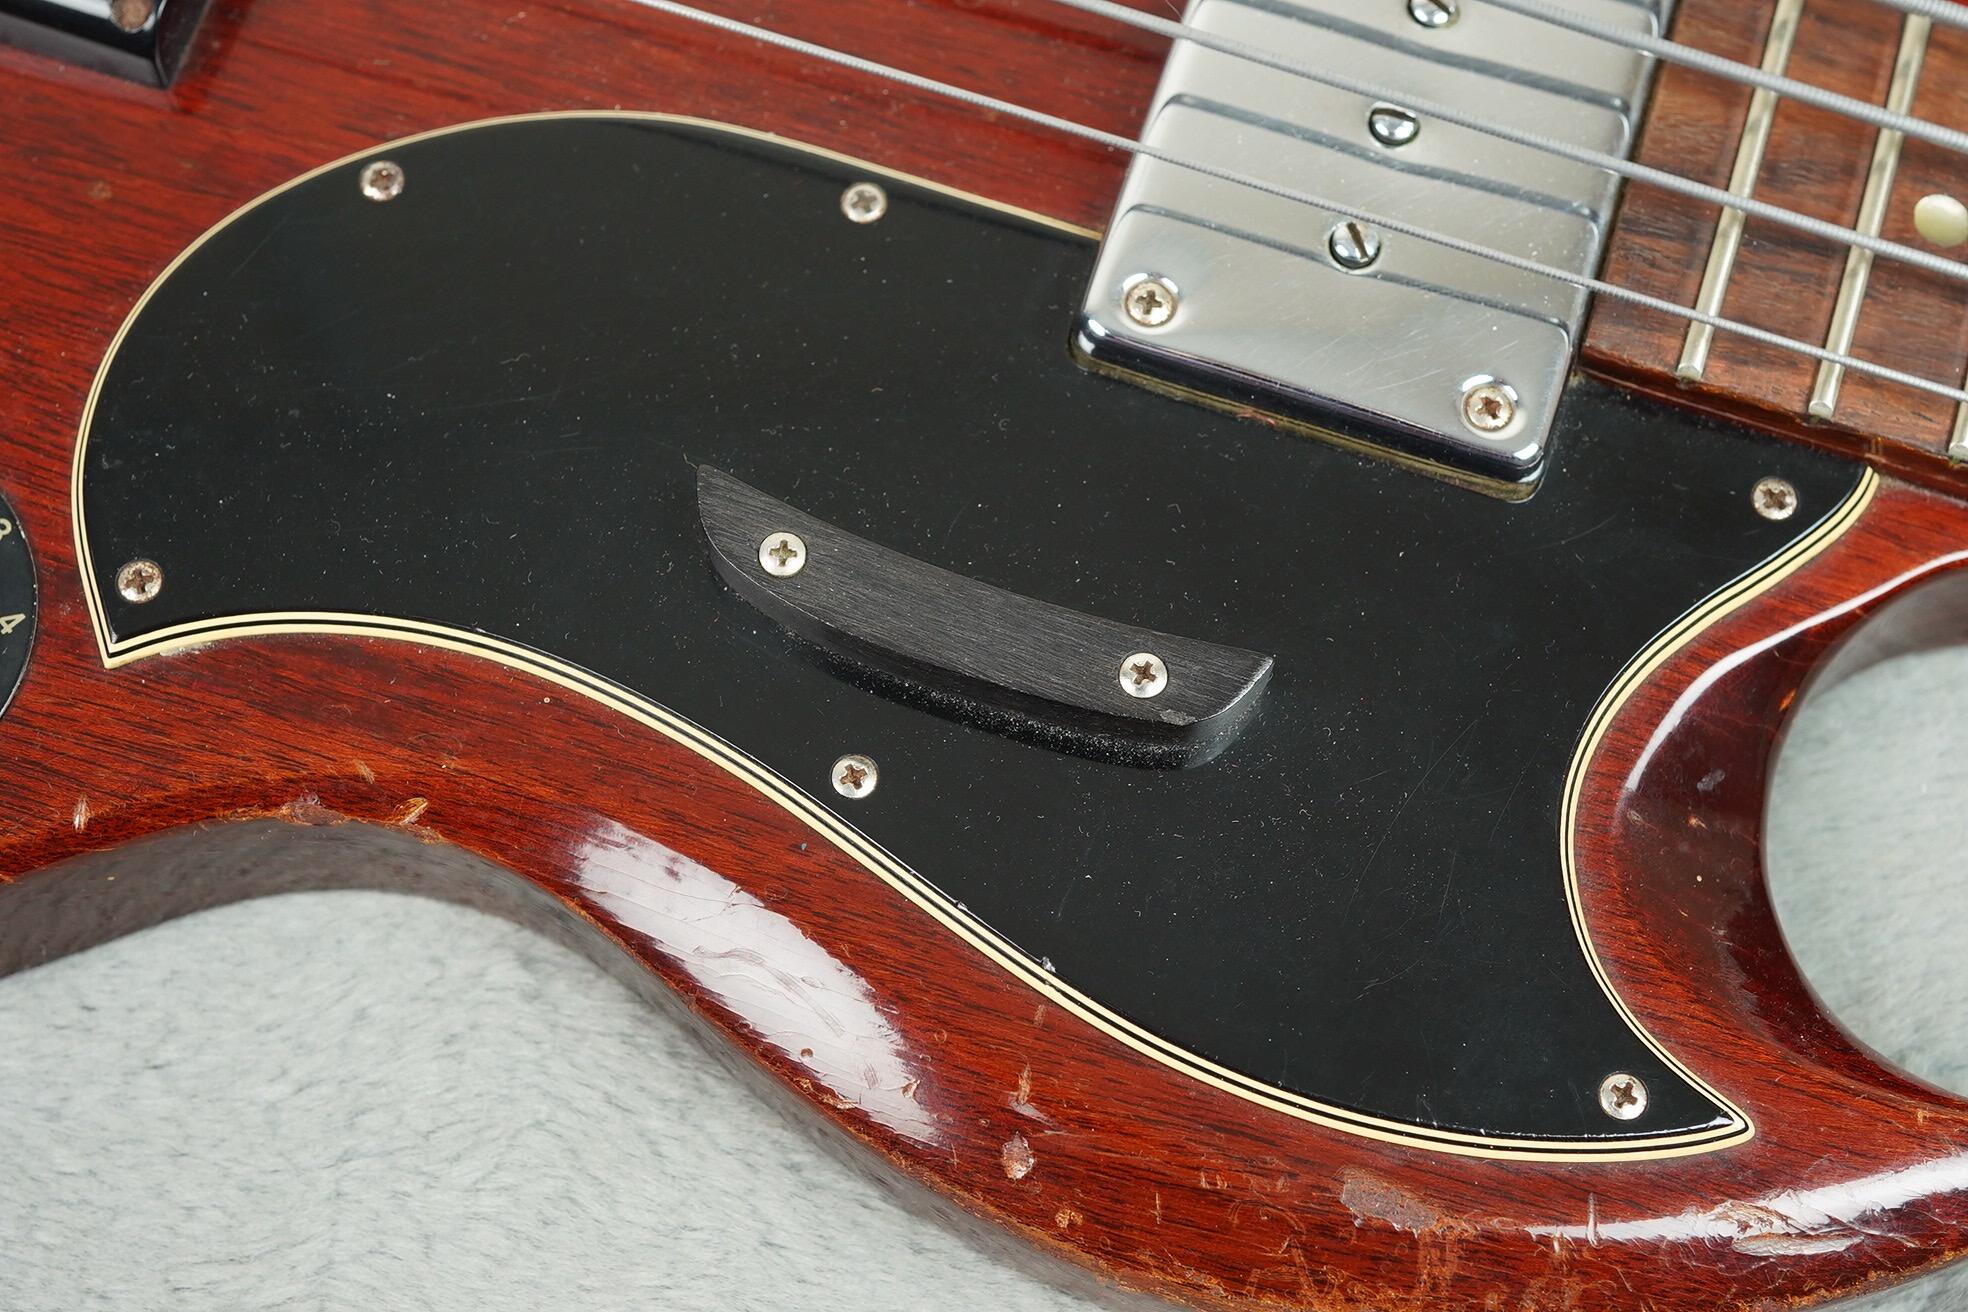 1968 Gibson EB-3